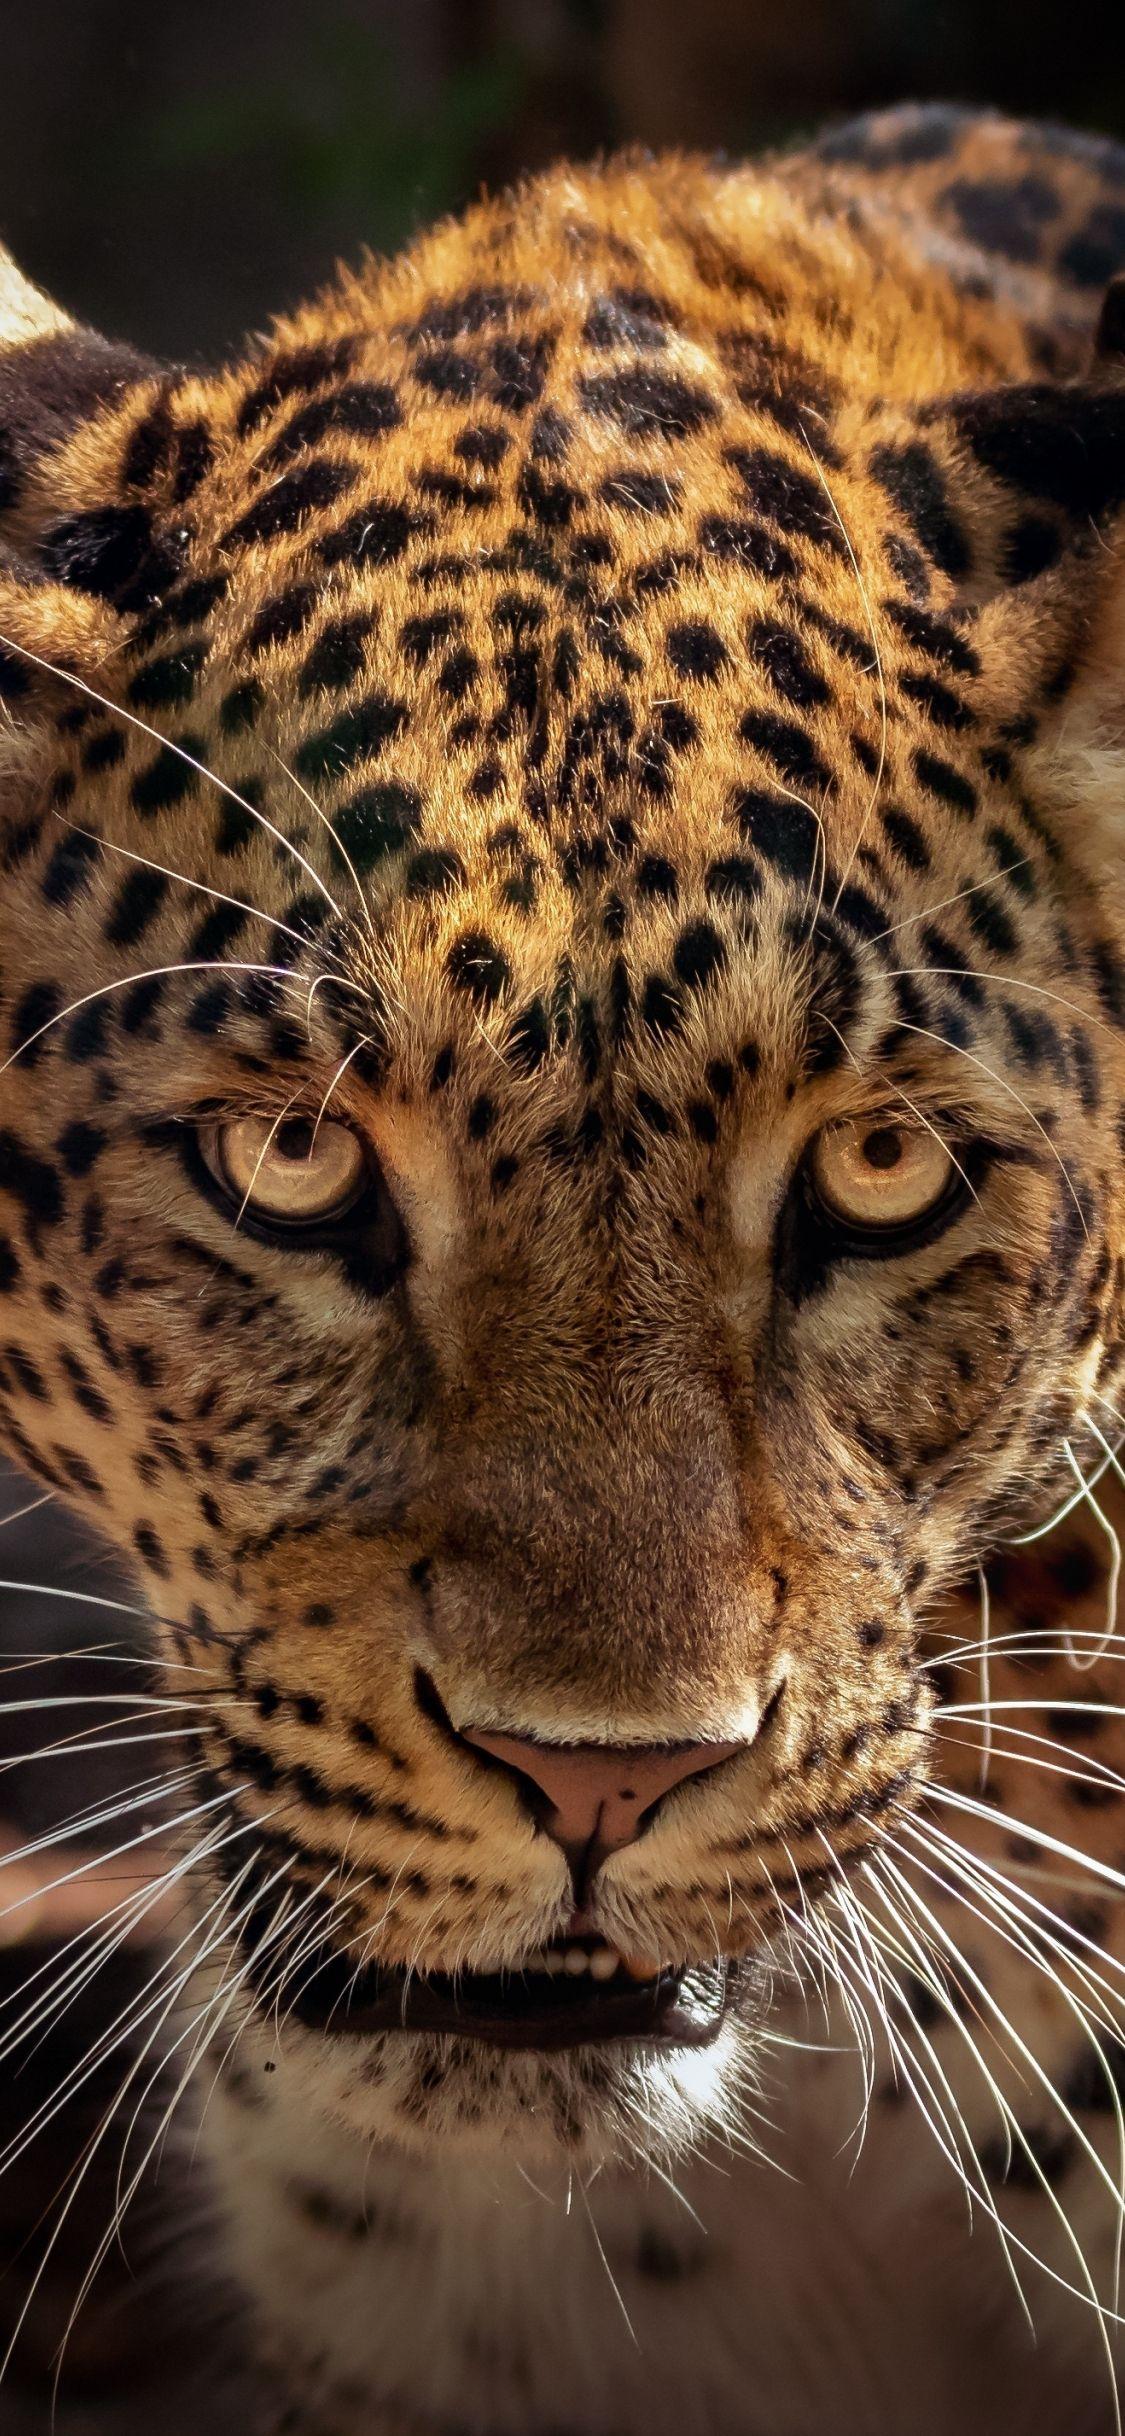 Jaguar Iphone Wallpapers - Top Free Jaguar Iphone Backgrounds